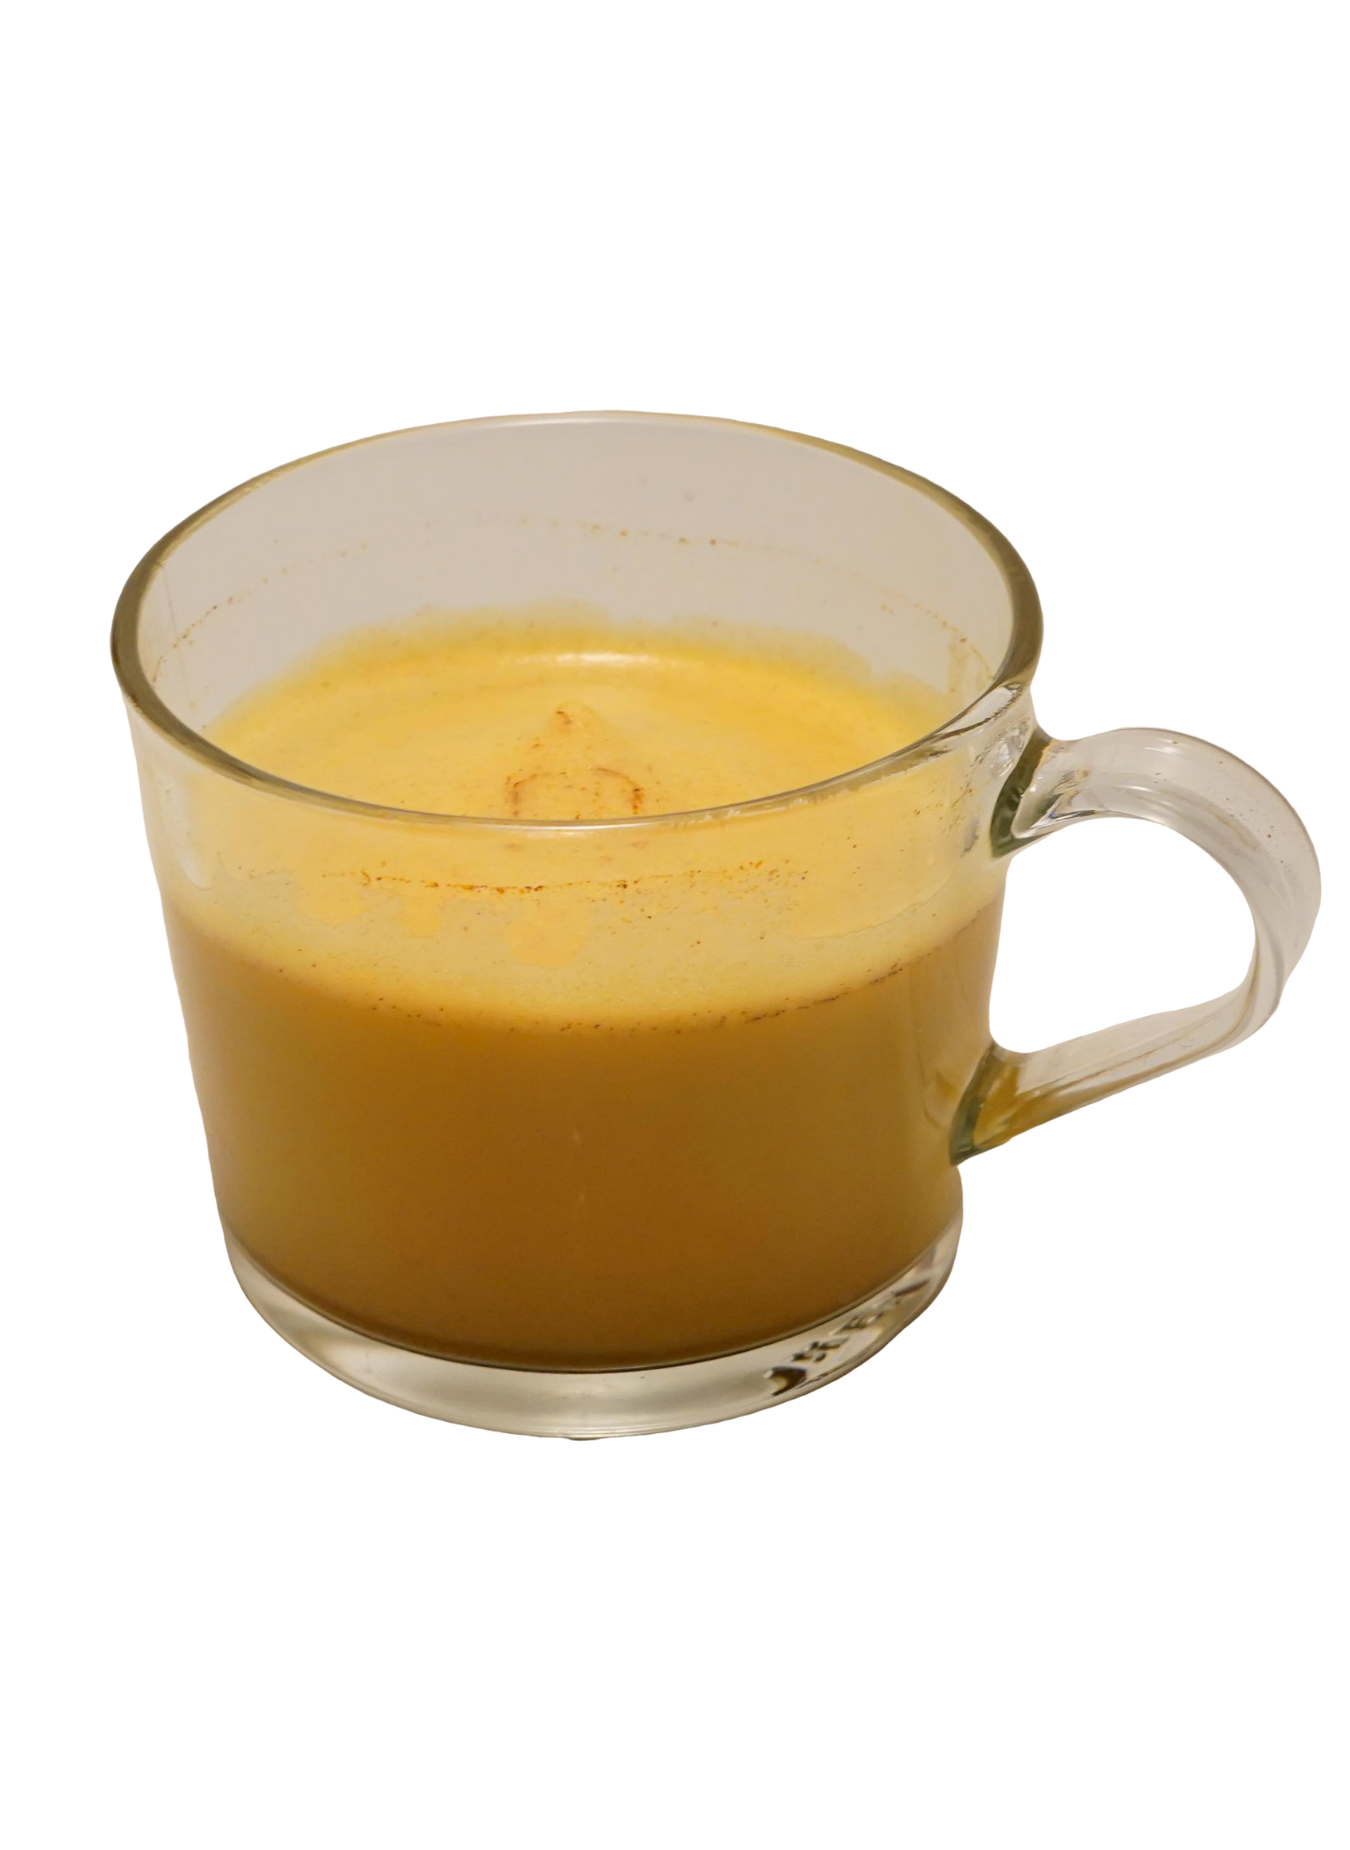 Vegan Golden Milk (Turmeric Latte) - HalfPastHungry